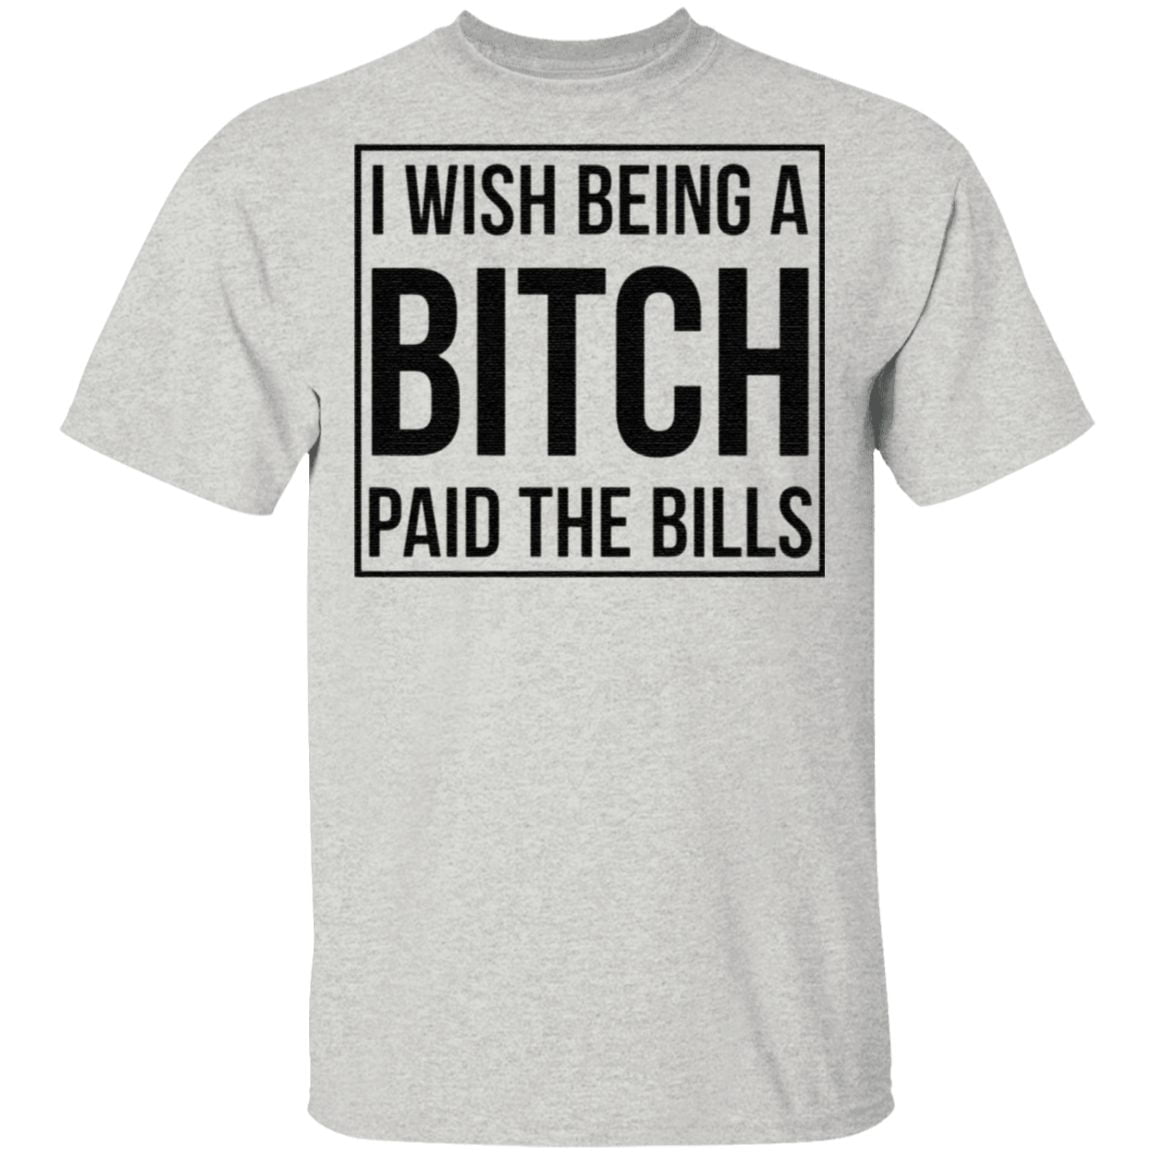 I wish being a bitch paid the bills t shirt